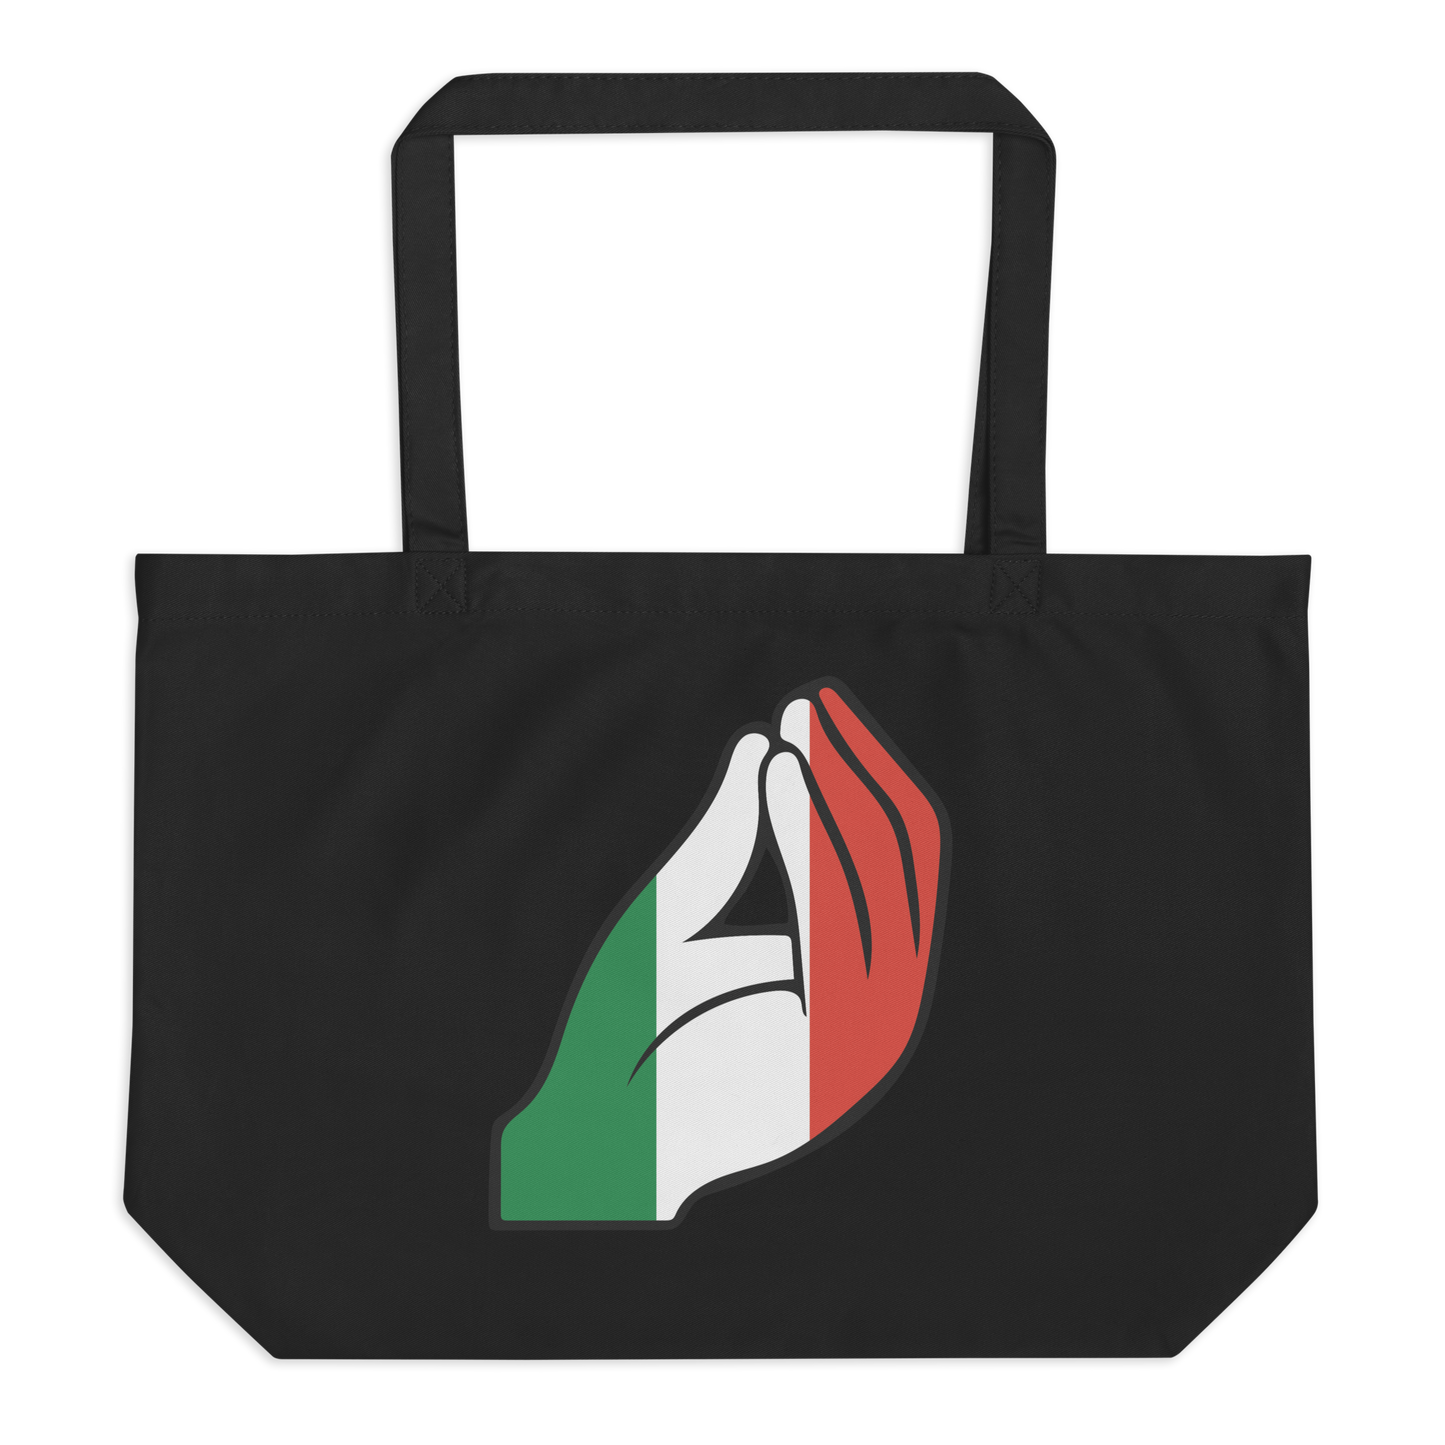 Italian Capiche Hand Large Tote Bag - Cultural Symbol Carryall